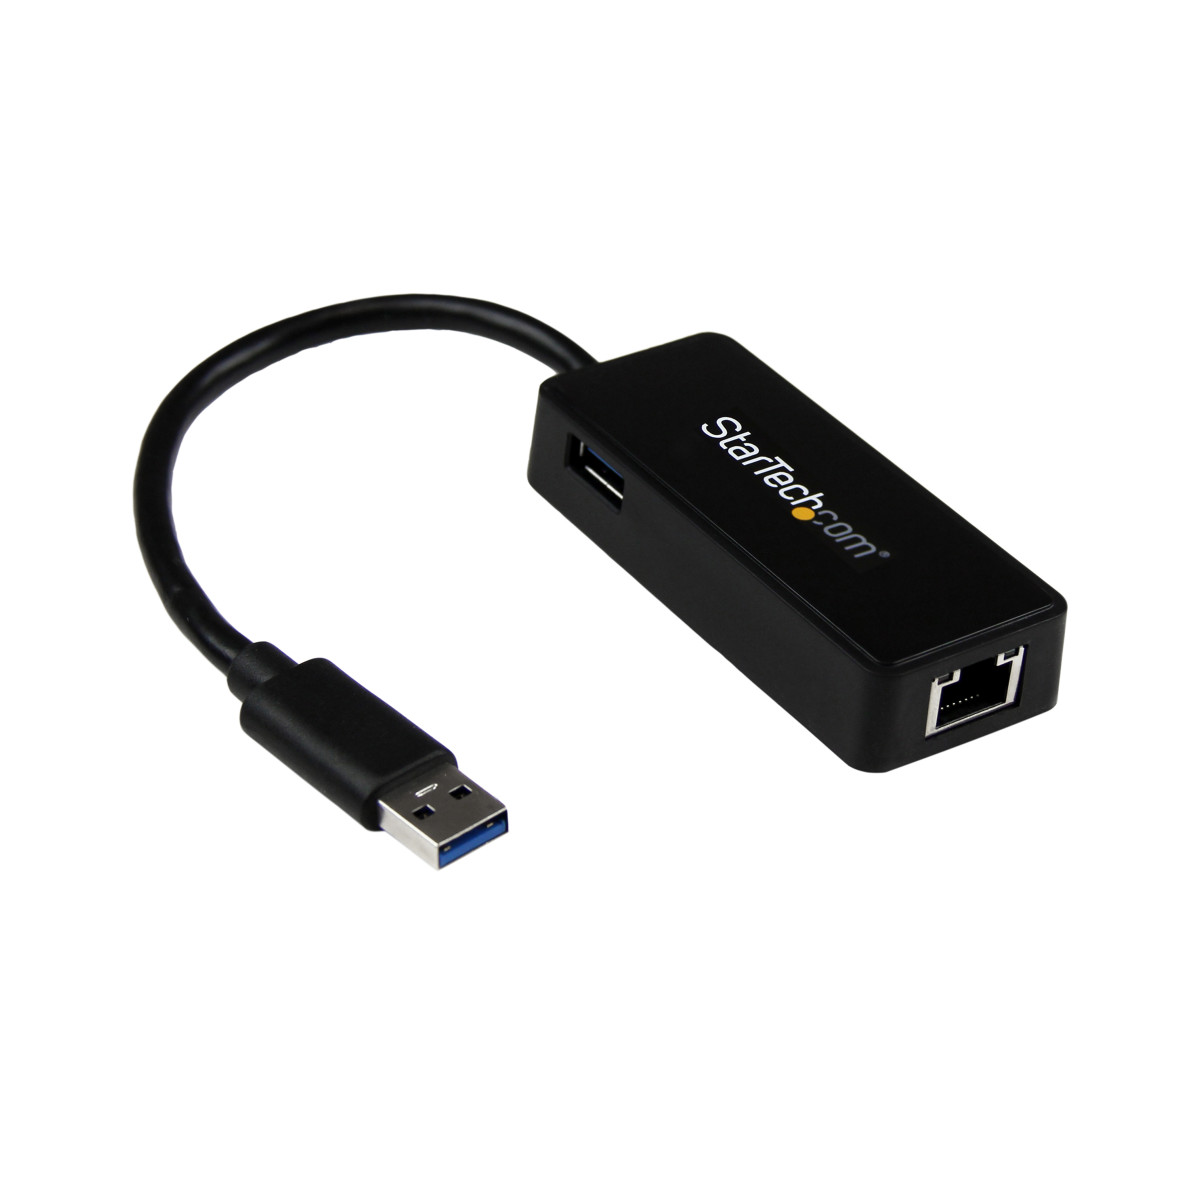 USB 3.0 to Gigabit Ethernet Adapter NIC